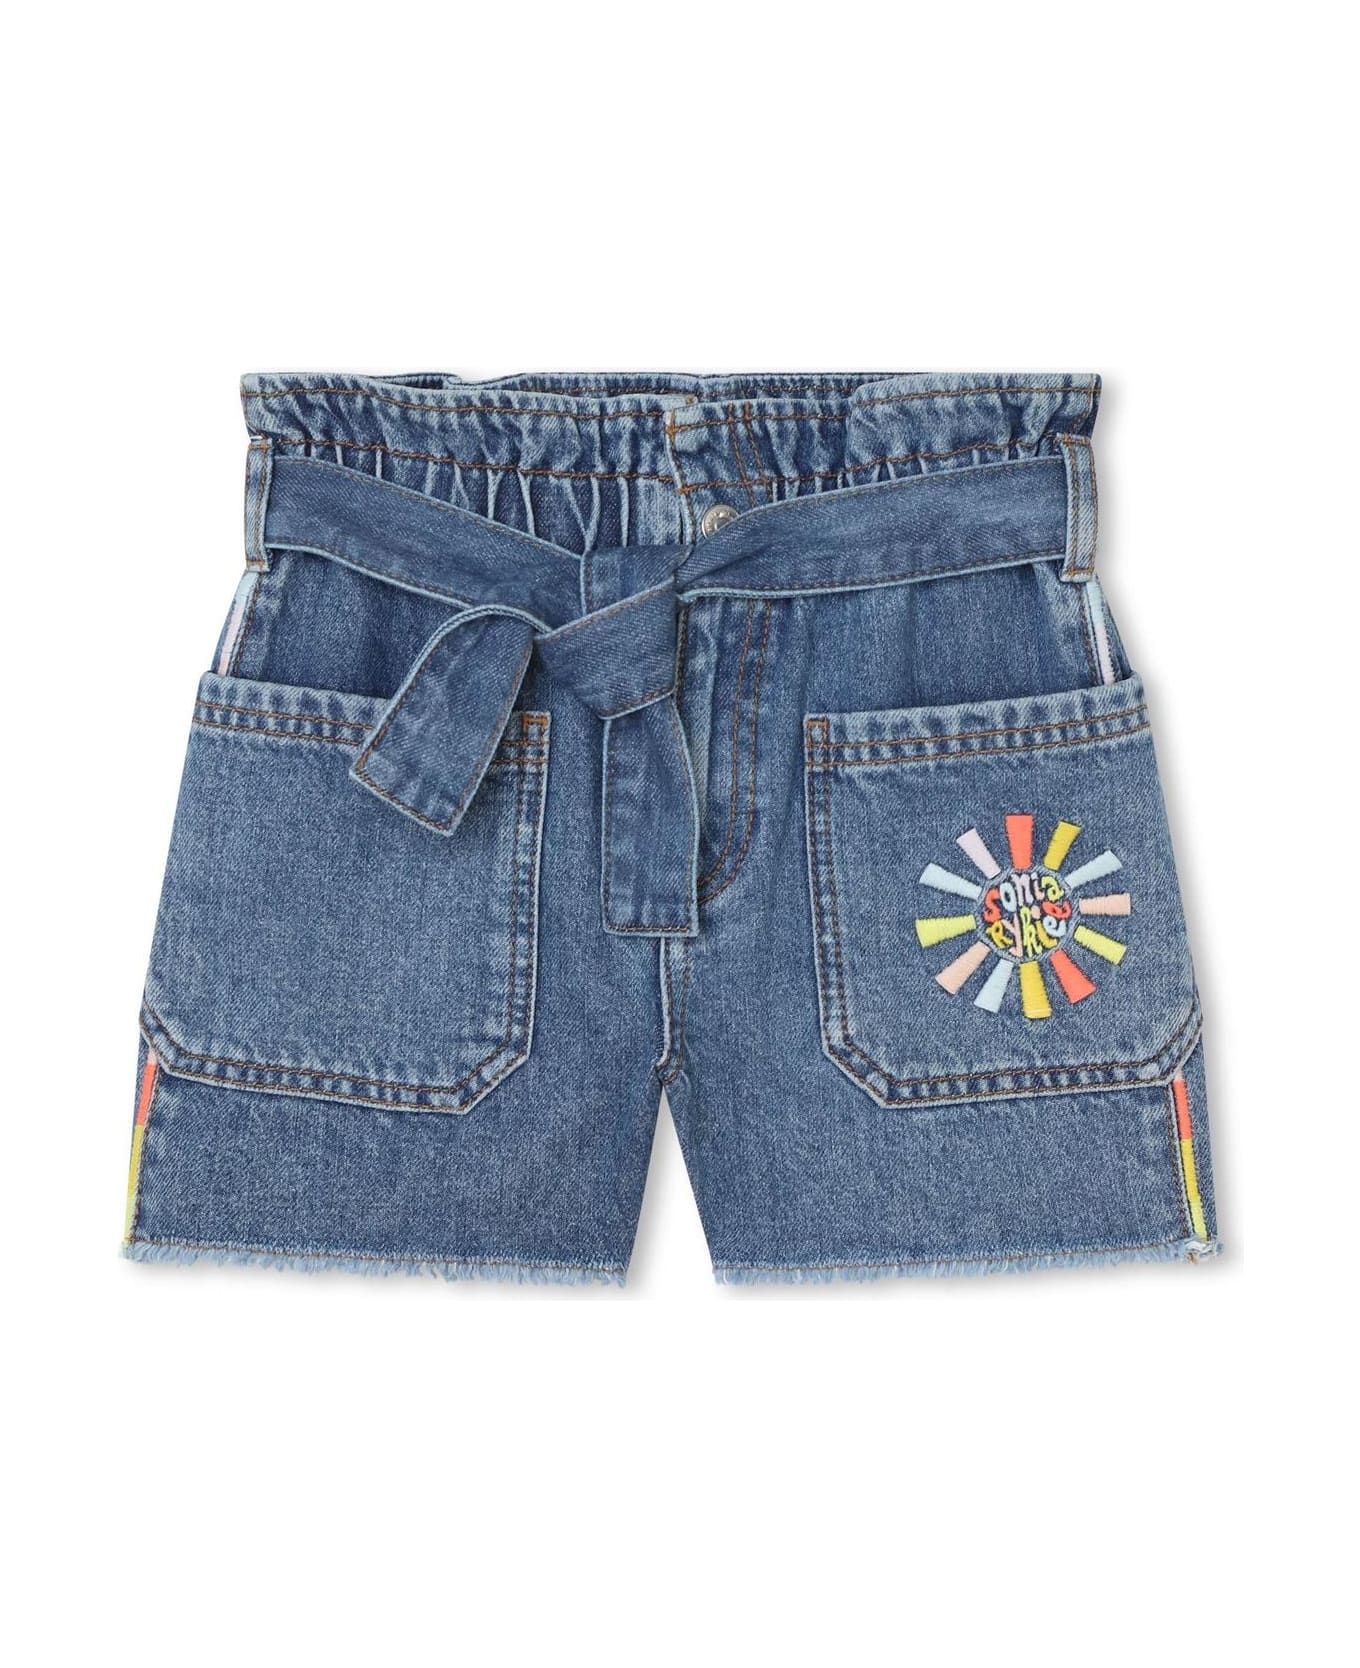 Sonia Rykiel Denim Shorts With Embroidery - Light blue